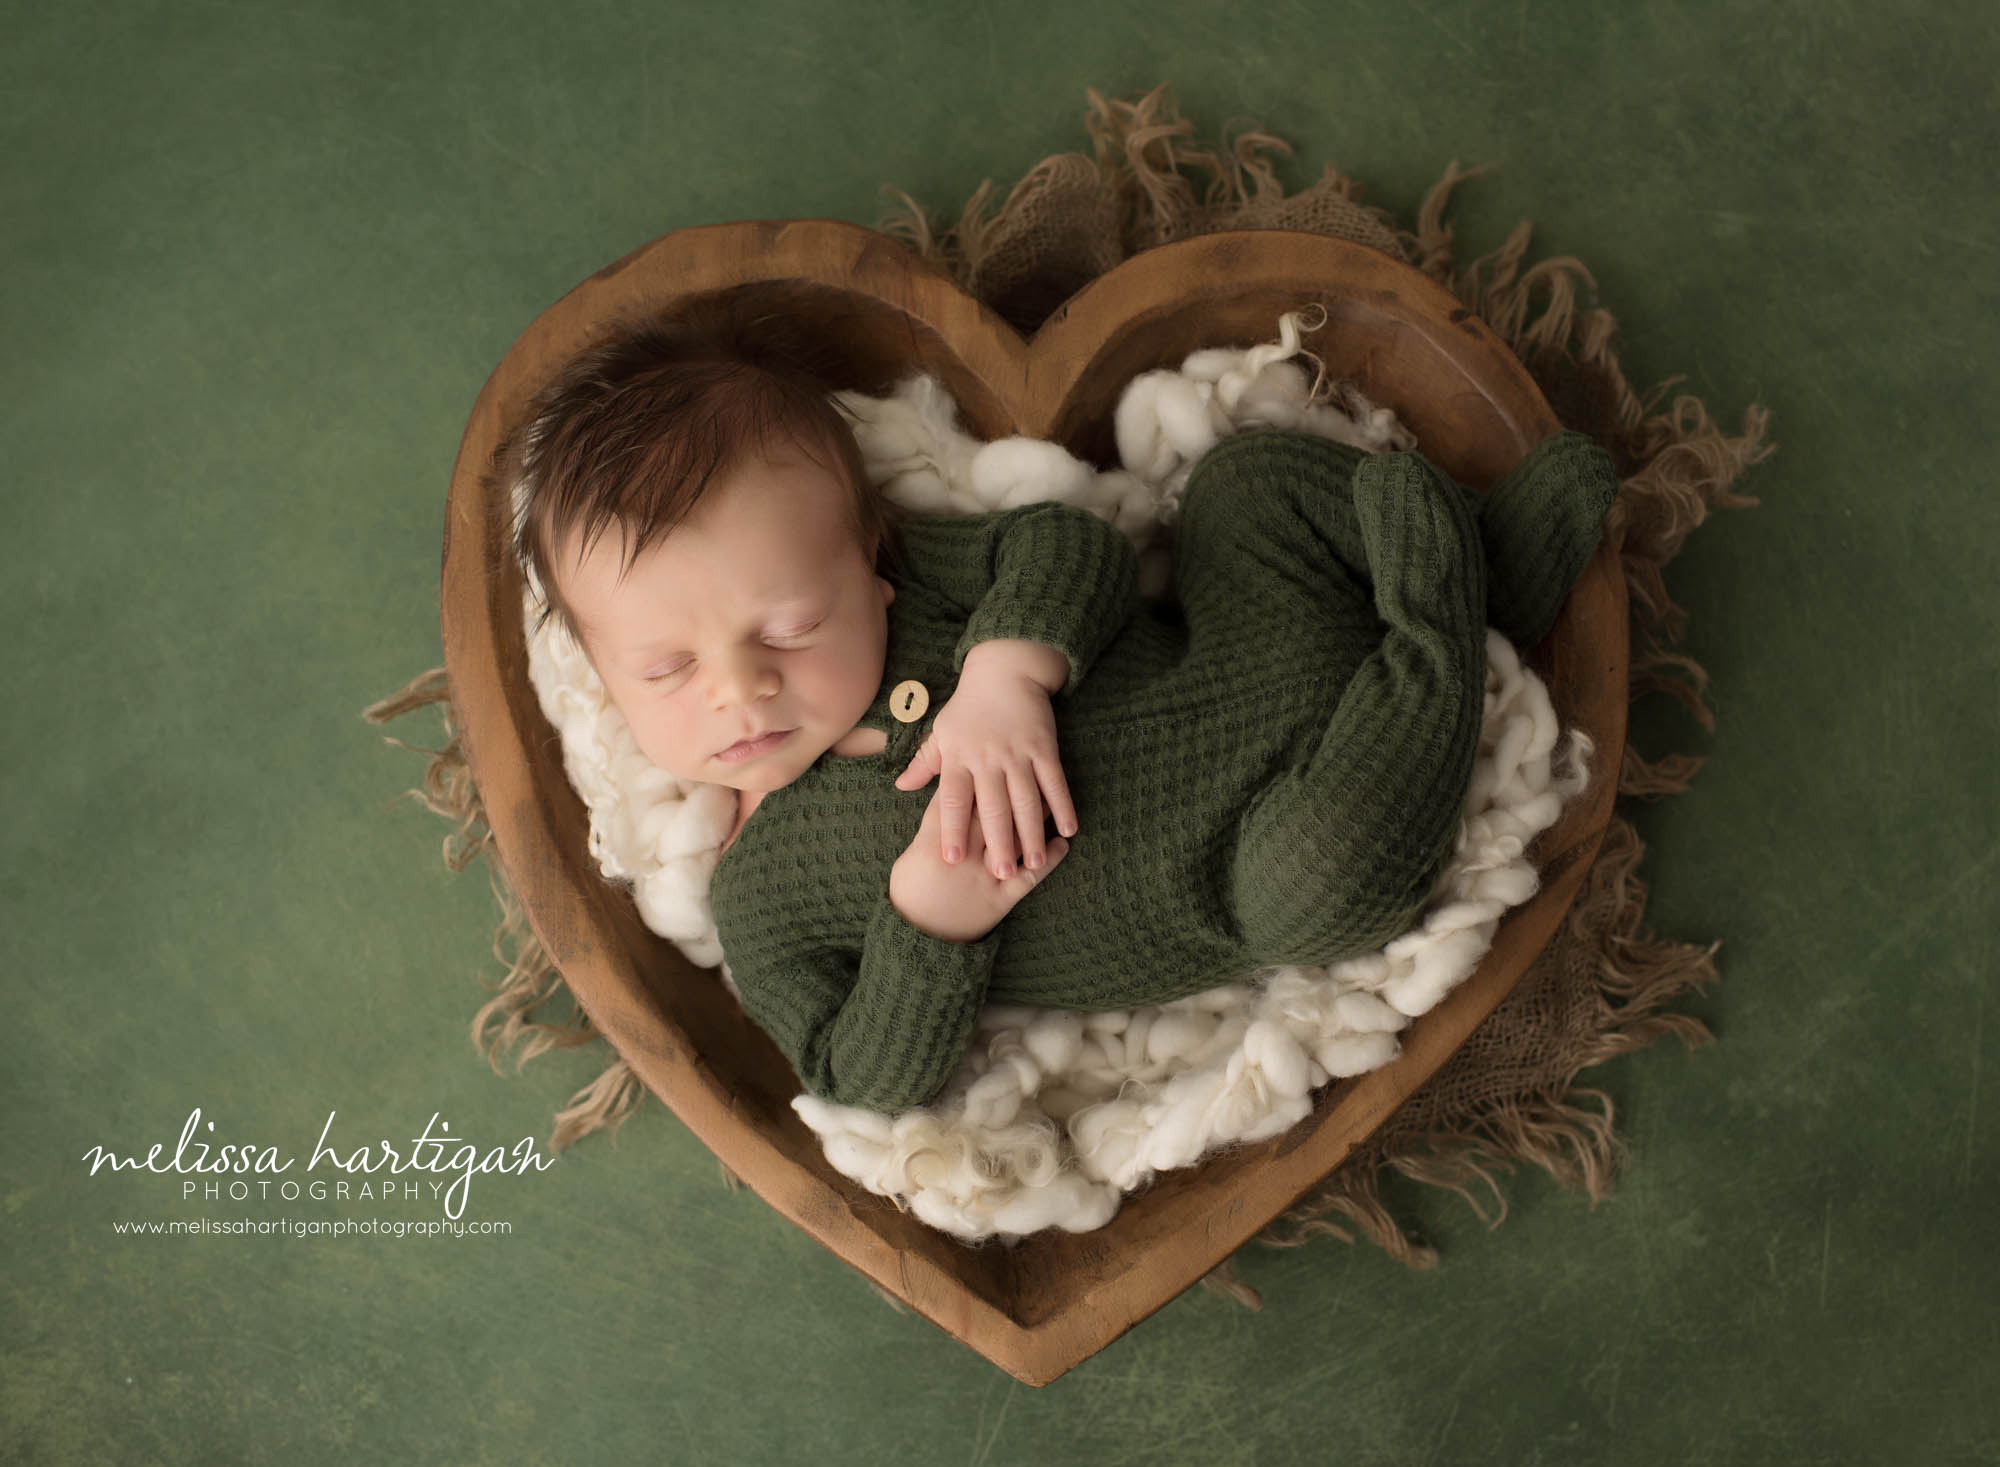 newborn baby boy wearing green newborn romper posed in wooden heart bowl prop connecticut newborn baby photography